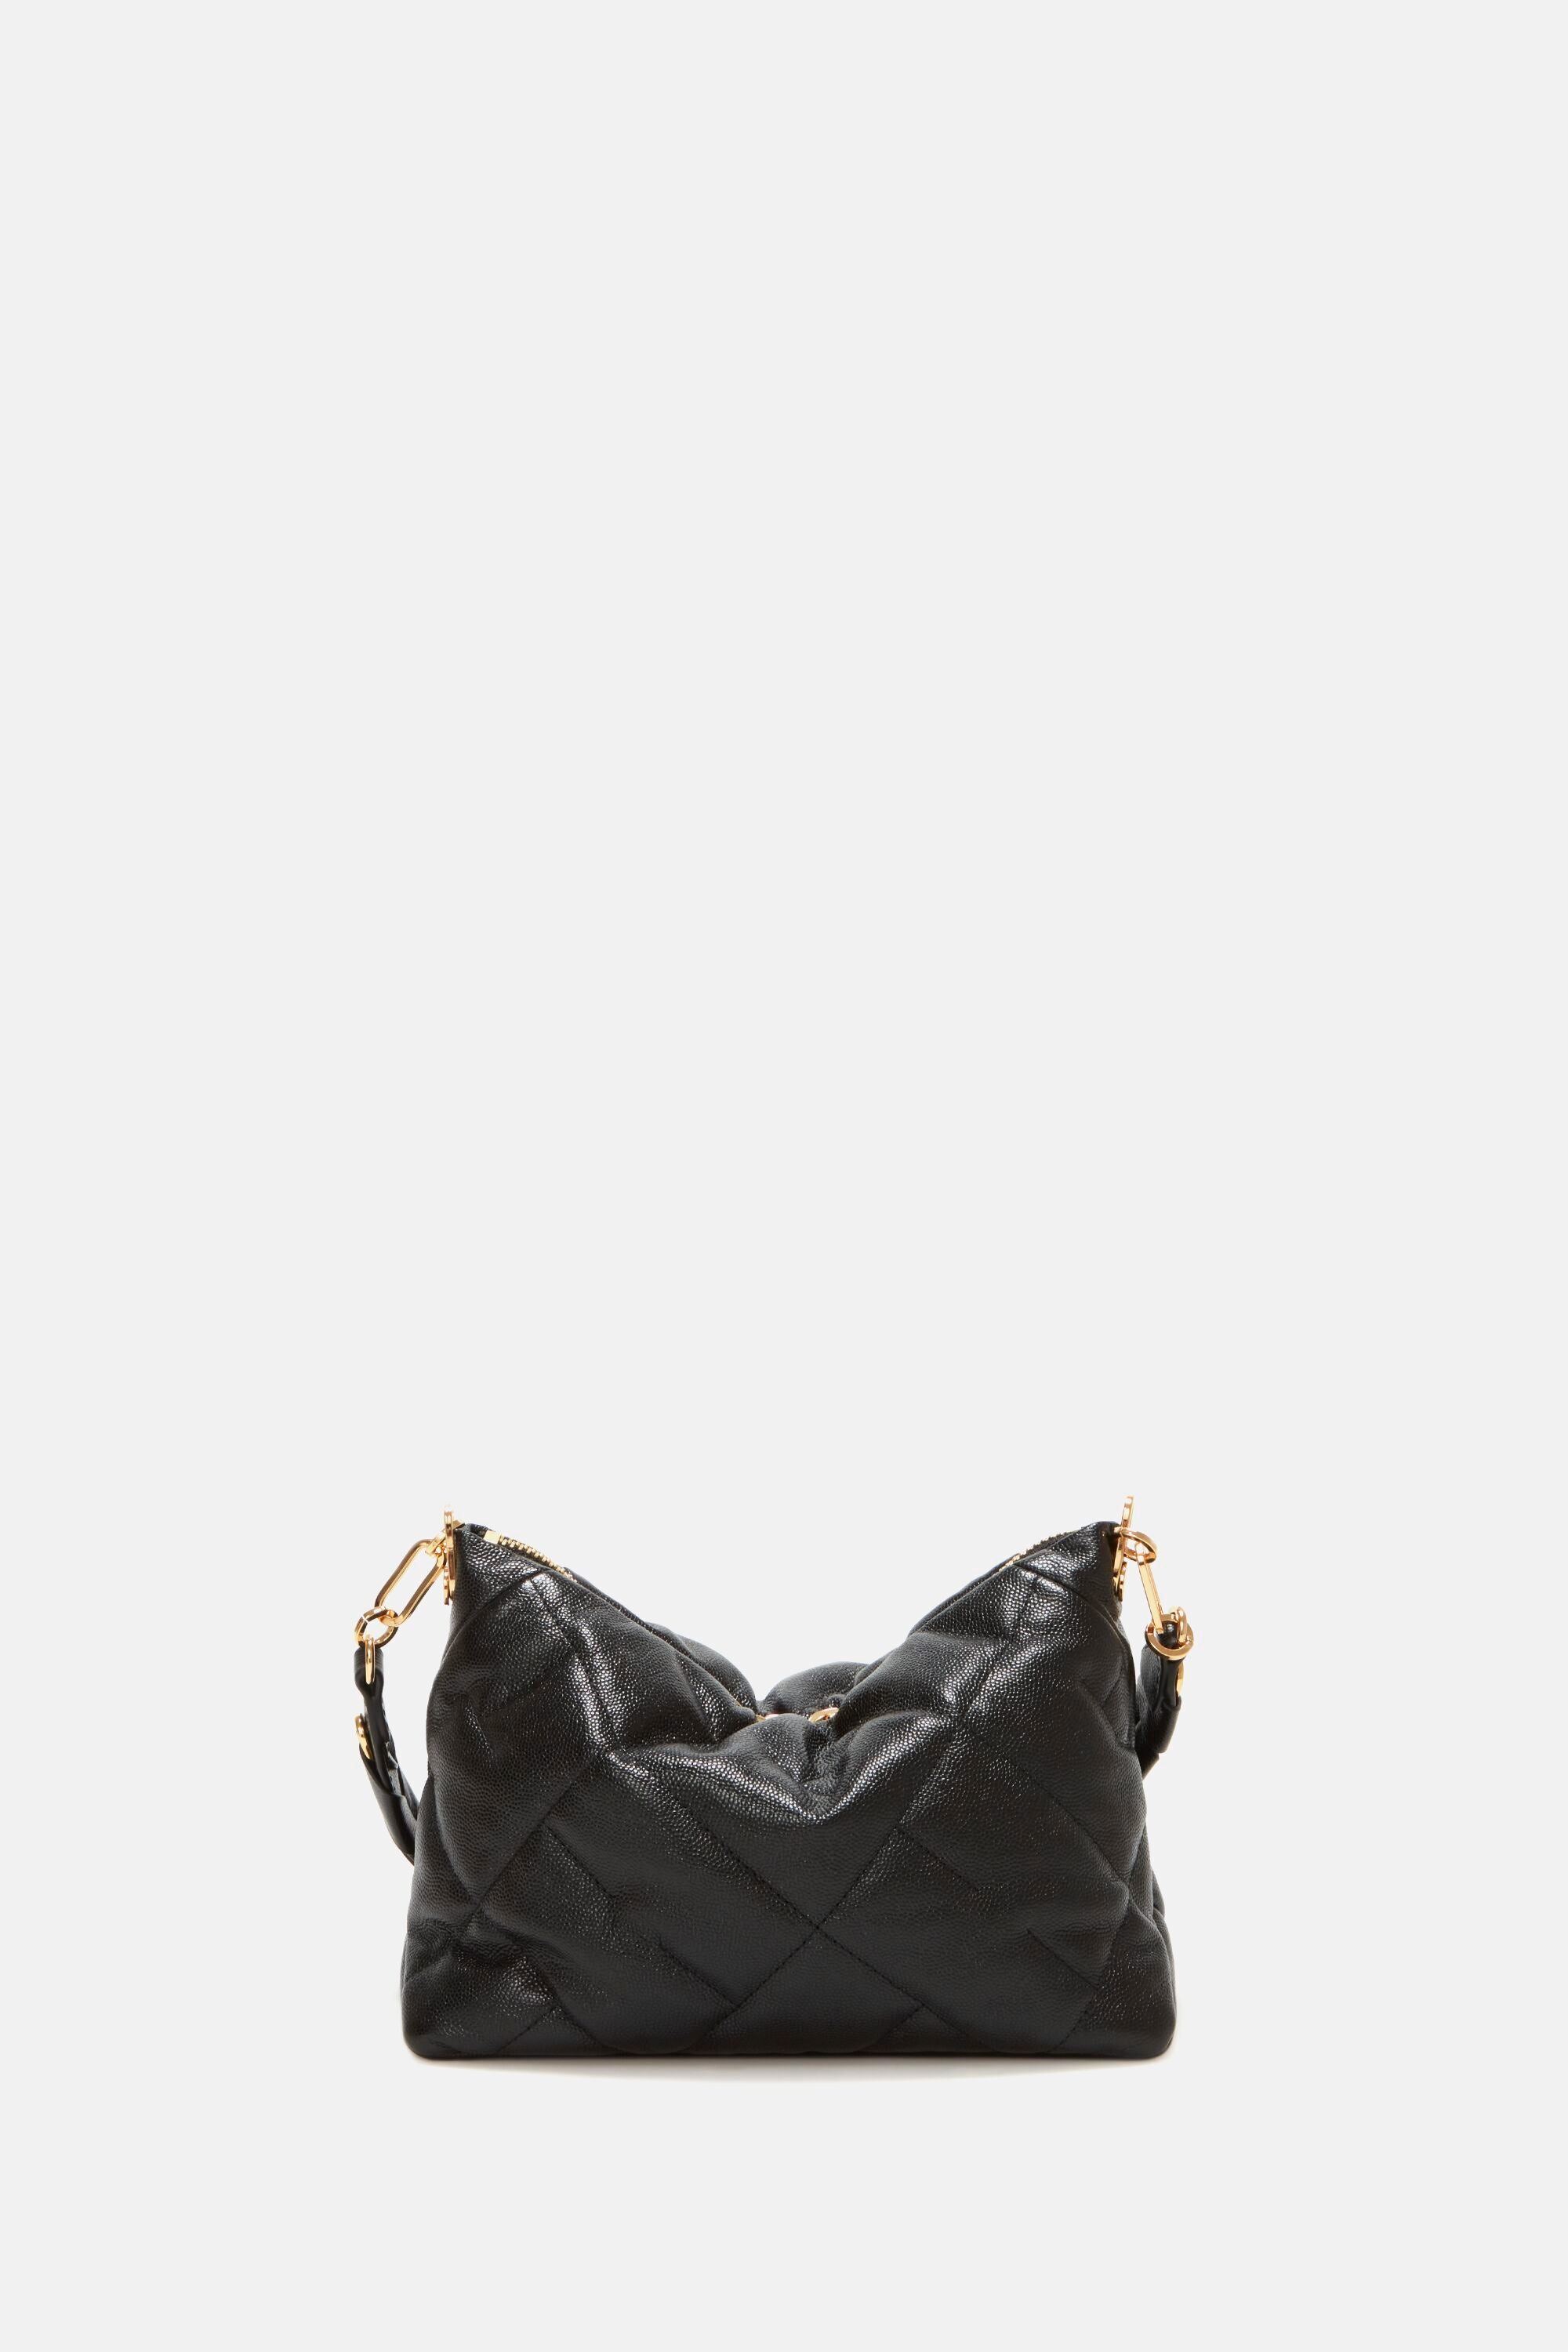 Mini Bimba Soft Hobo  Small shoulder bag black - CH Carolina Herrera  United States